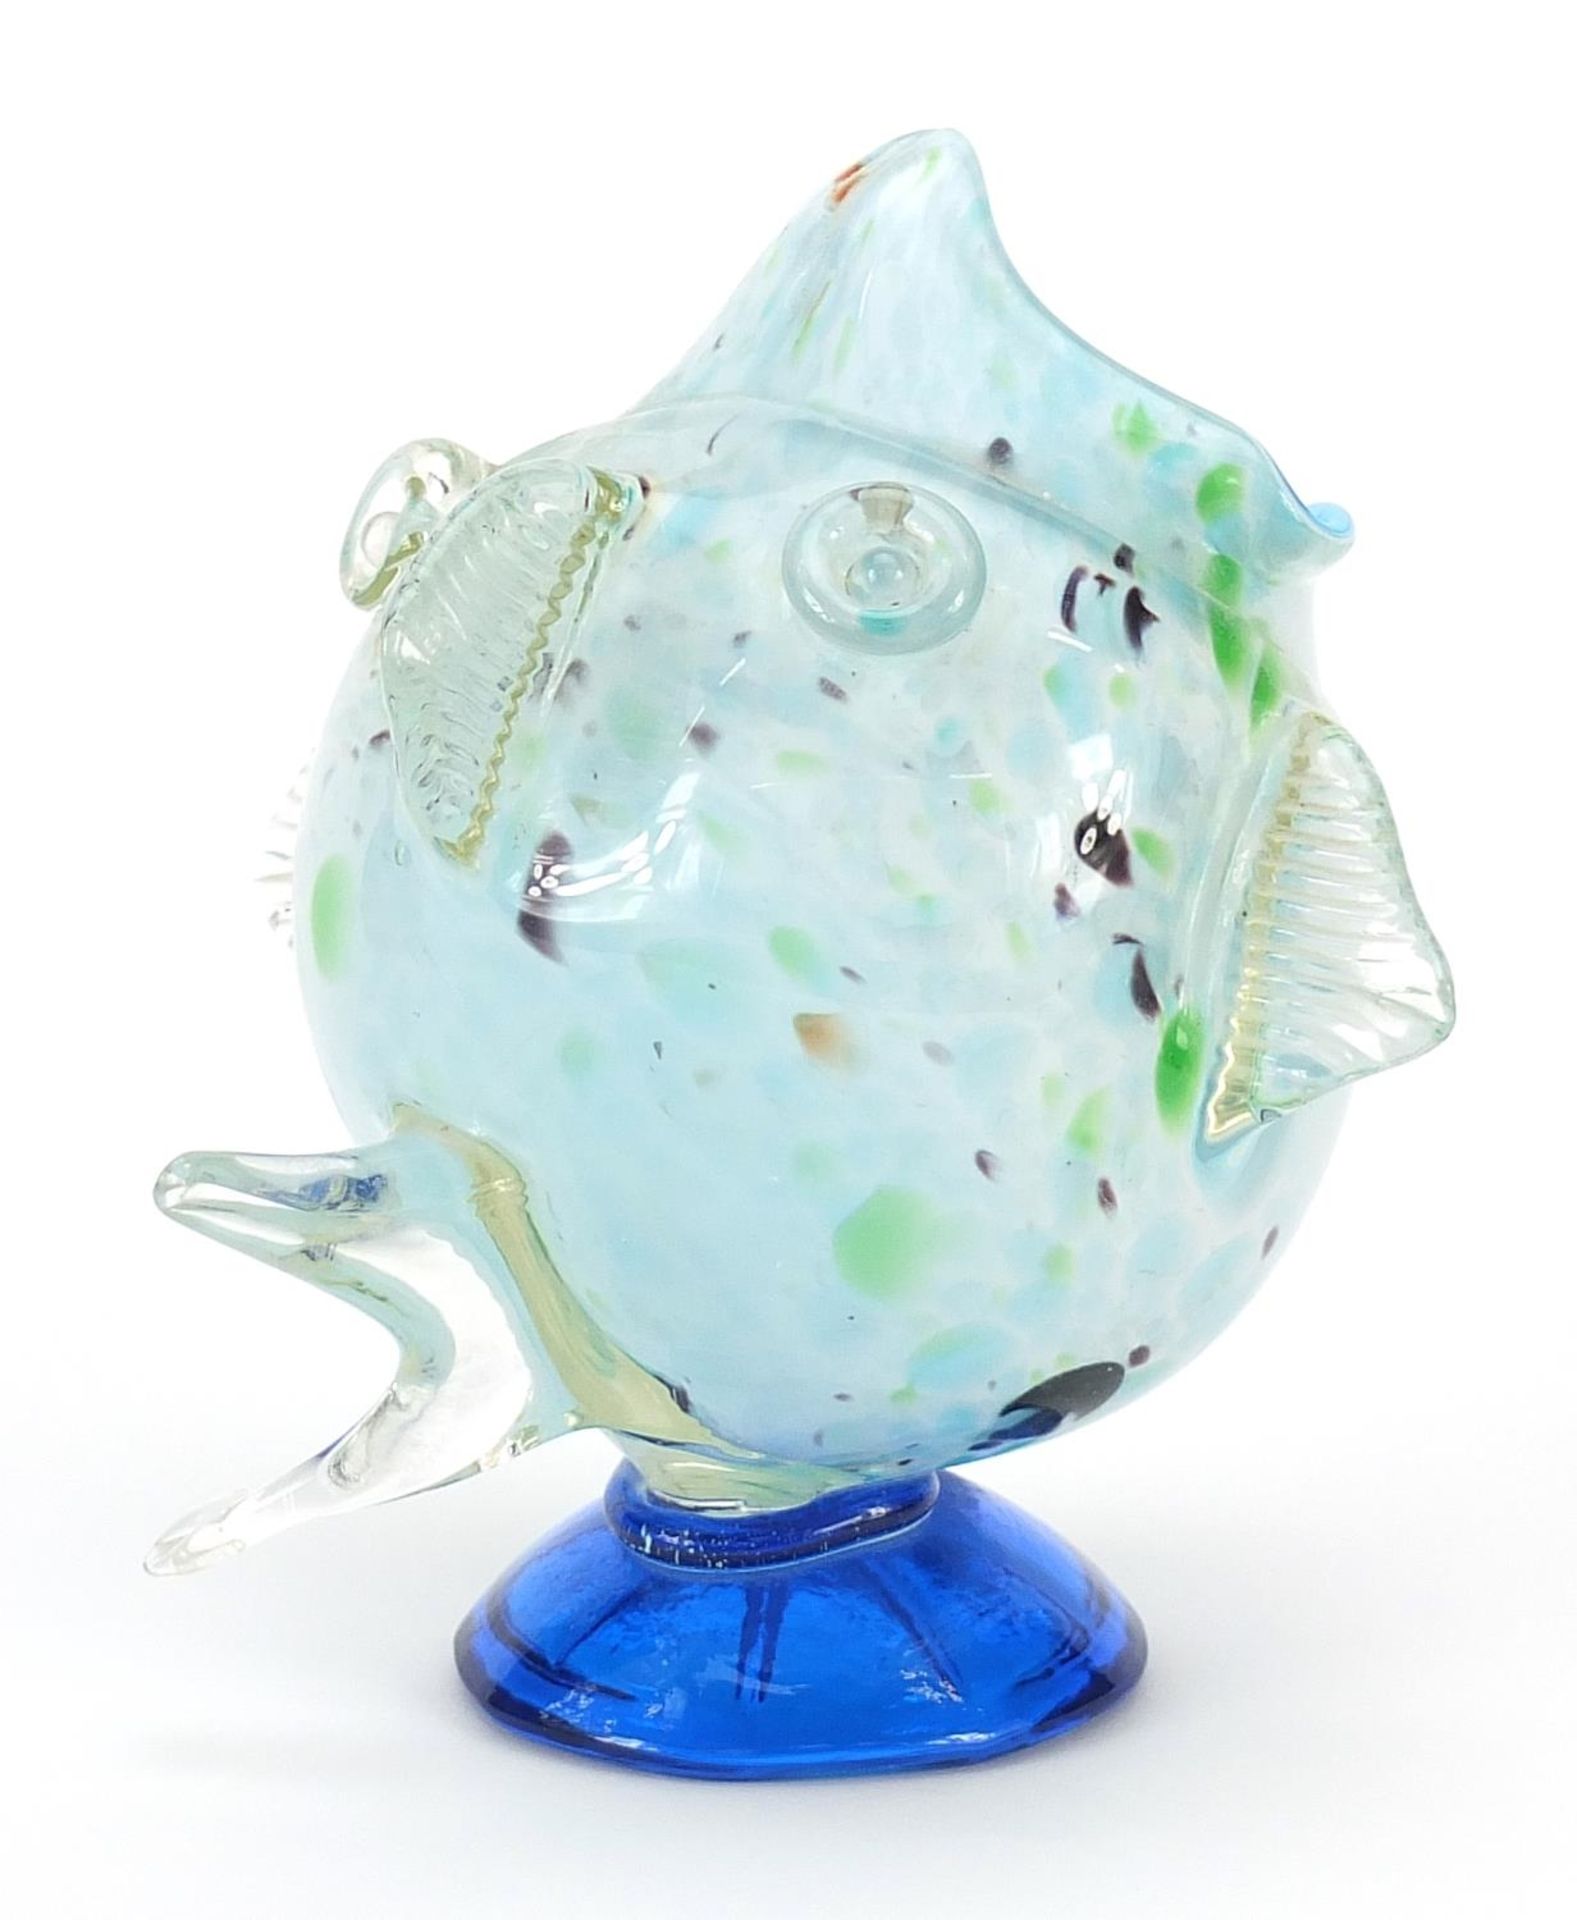 Maltese glass fish vase, 17cm high - Image 2 of 3